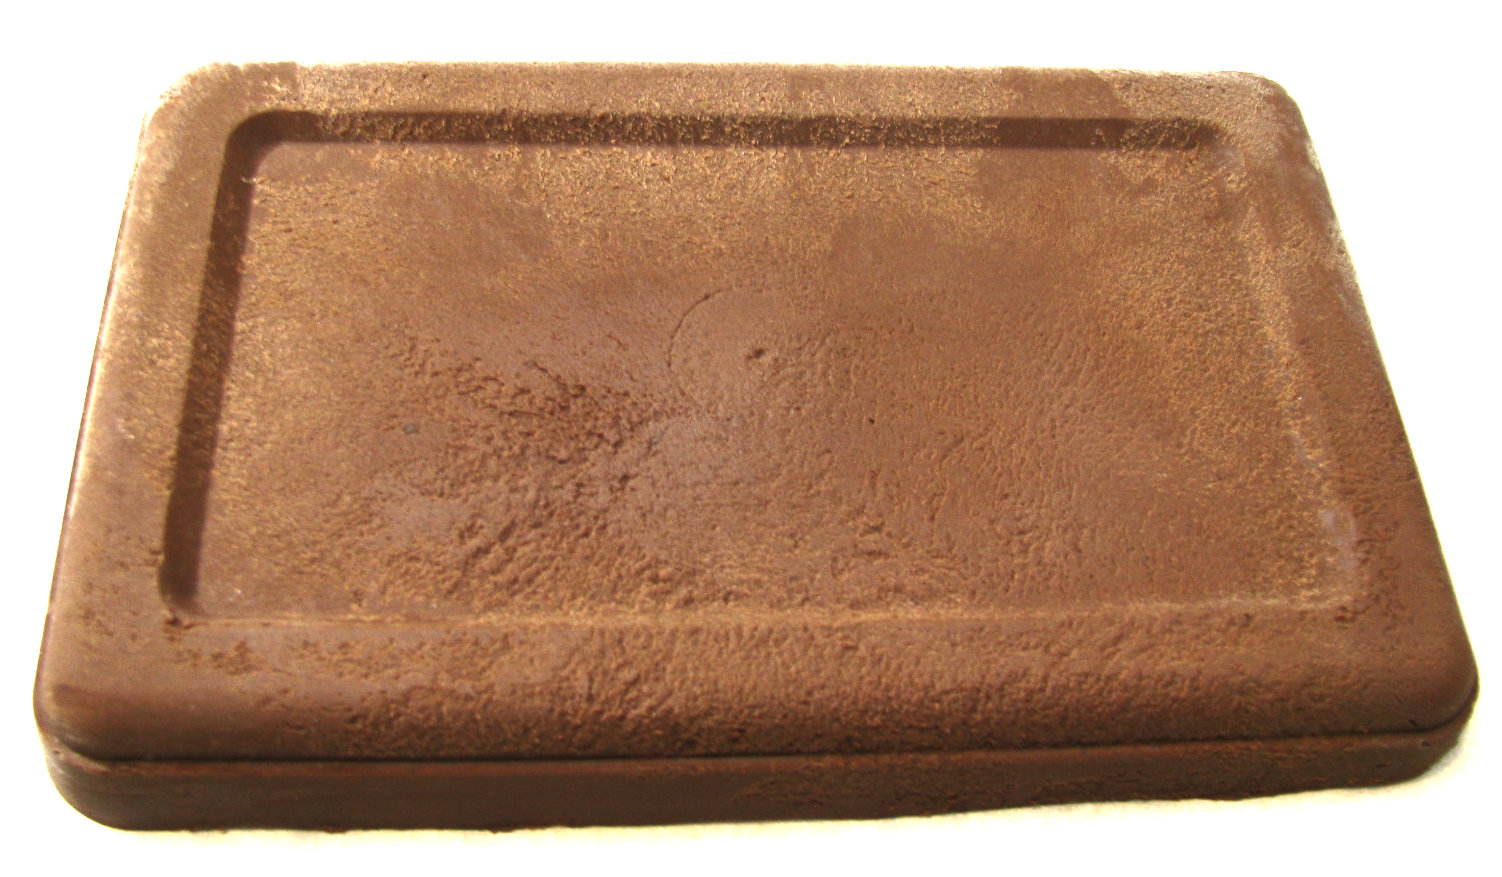 Home Made Chocolate Bar